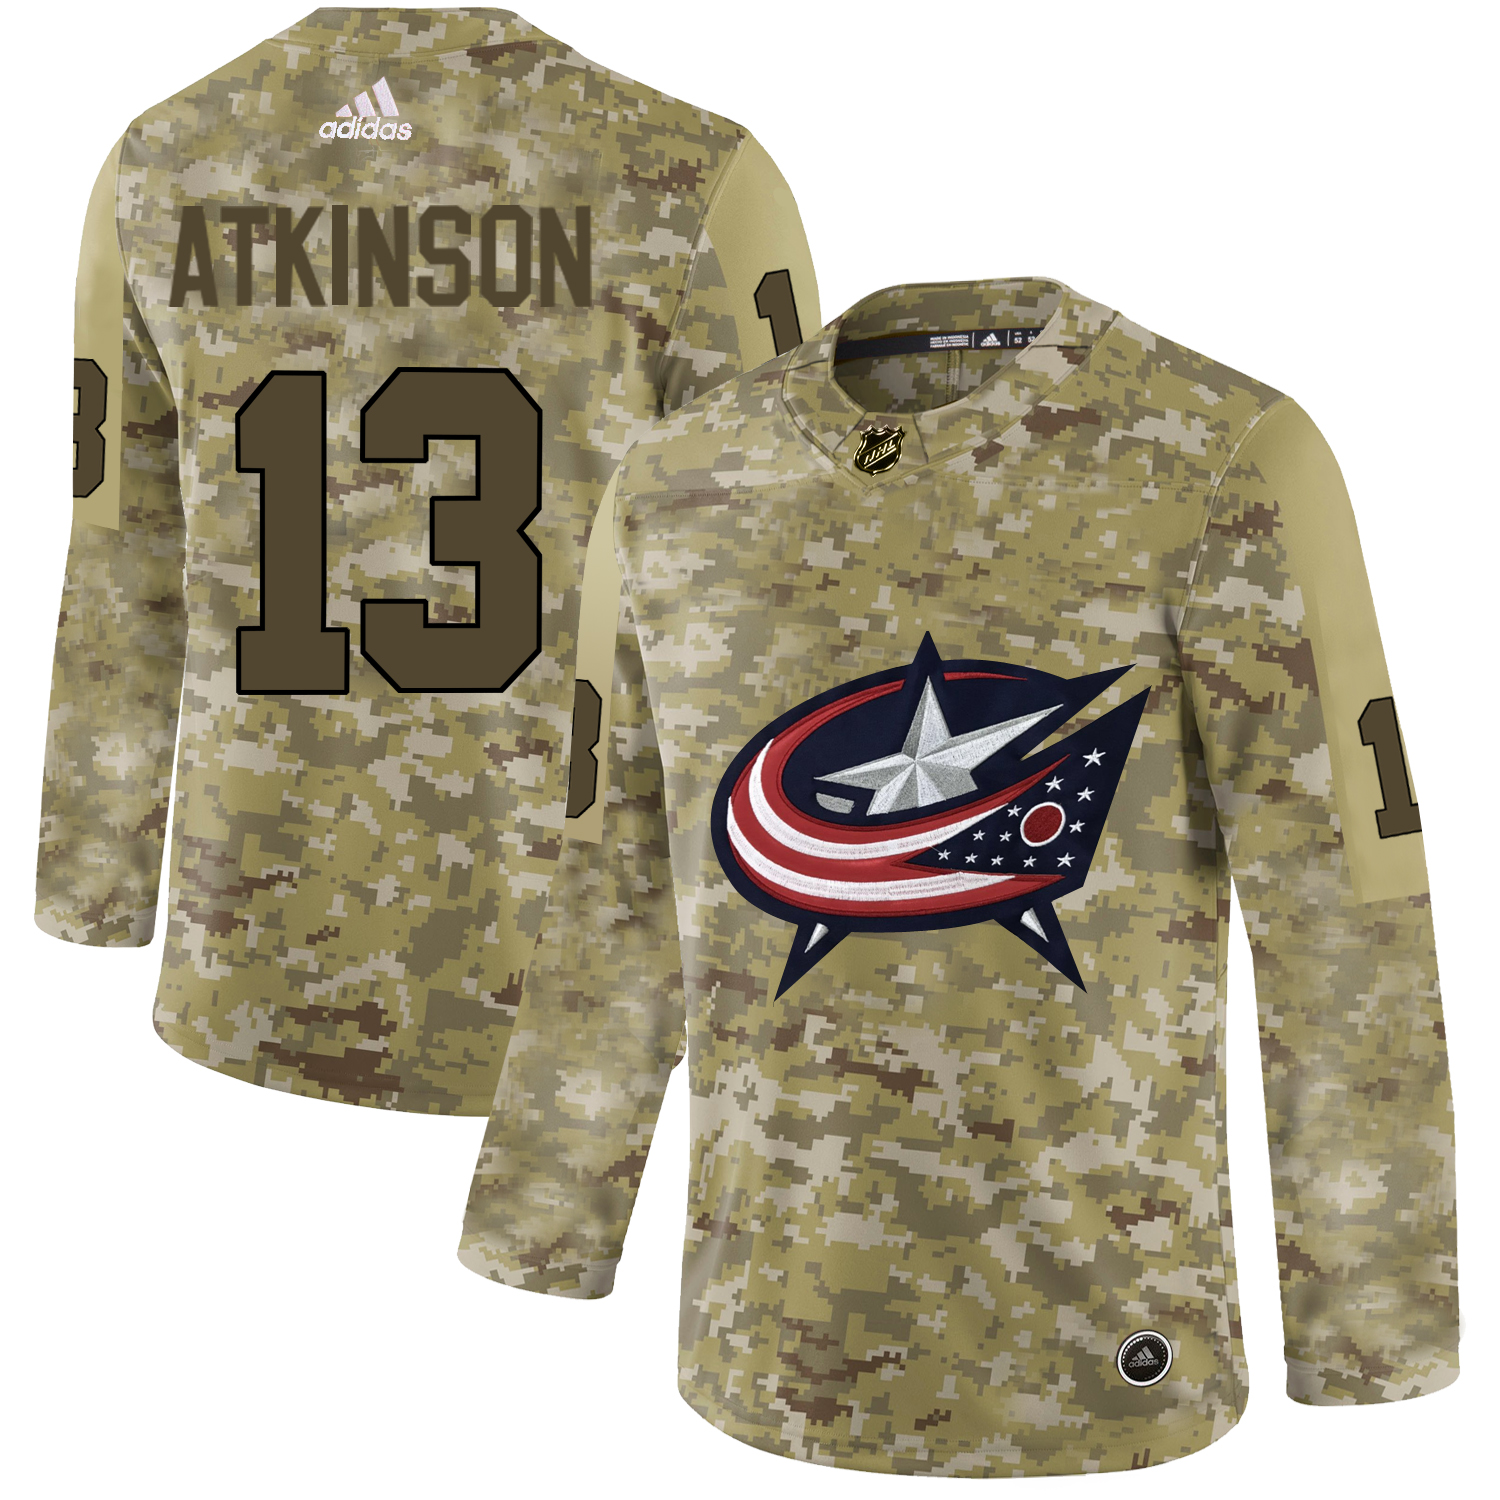 Adidas Blue Jackets #13 Cam Atkinson Camo Authentic Stitched NHL Jersey